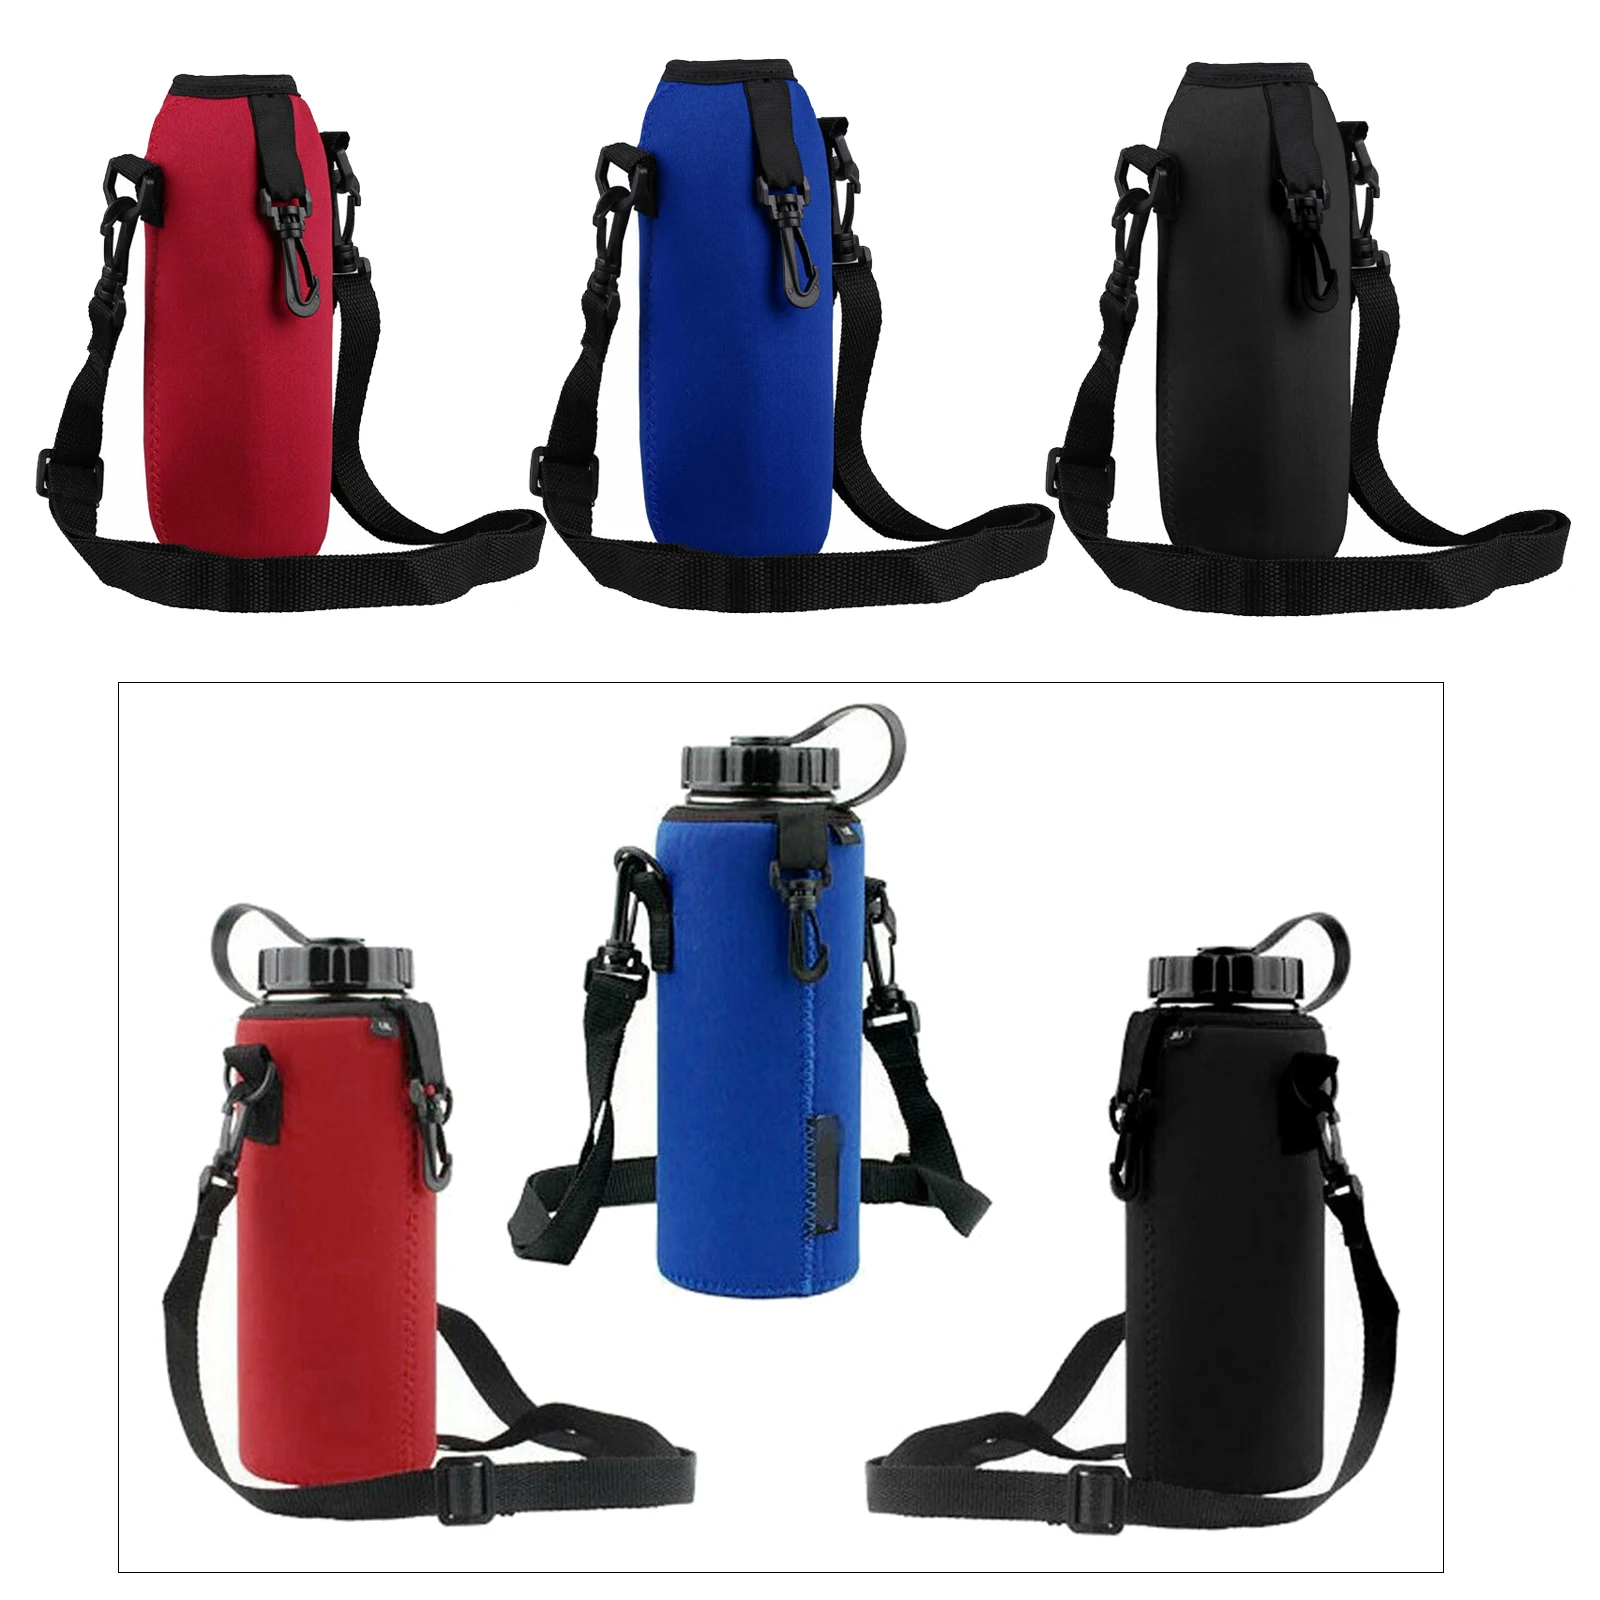 750ML Collapsible Neoprene Water Bottle Carrier Zipper Cooler Cover Insulator Holder Sleeve for Scuba Diving Sports